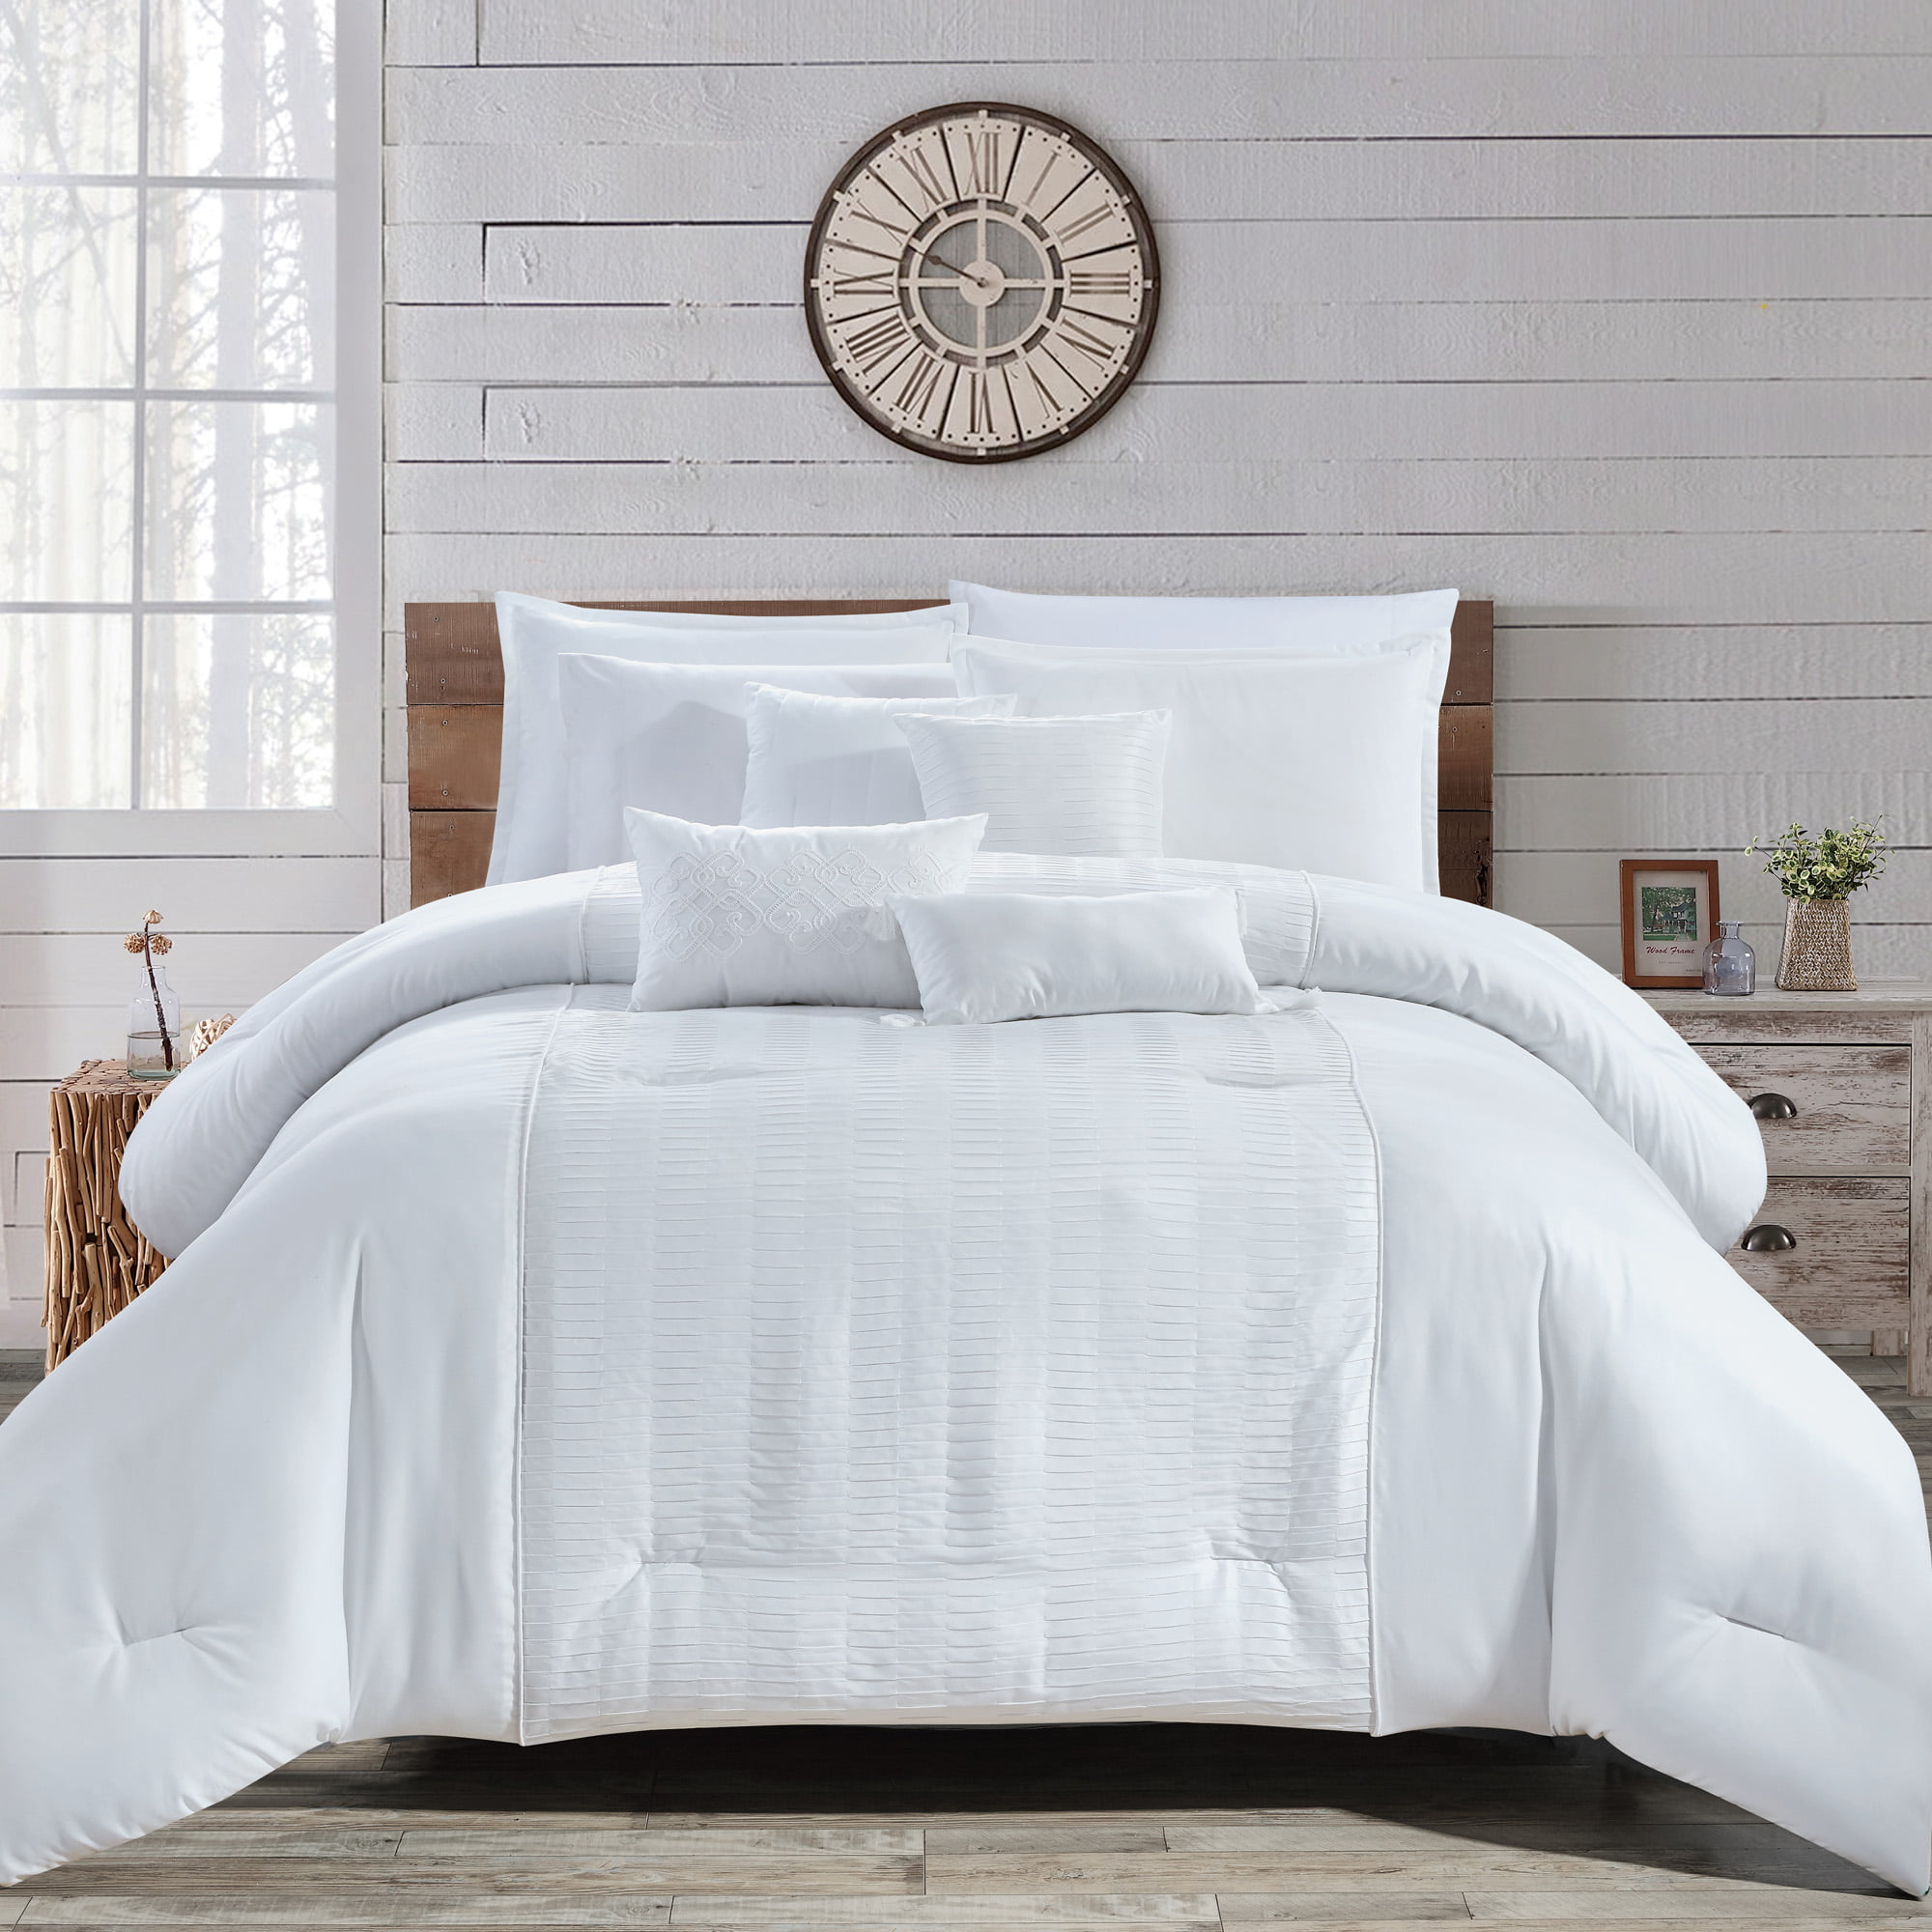 Hgmart Bedding Comforter Set Bed In A, Bed Comforters King Size